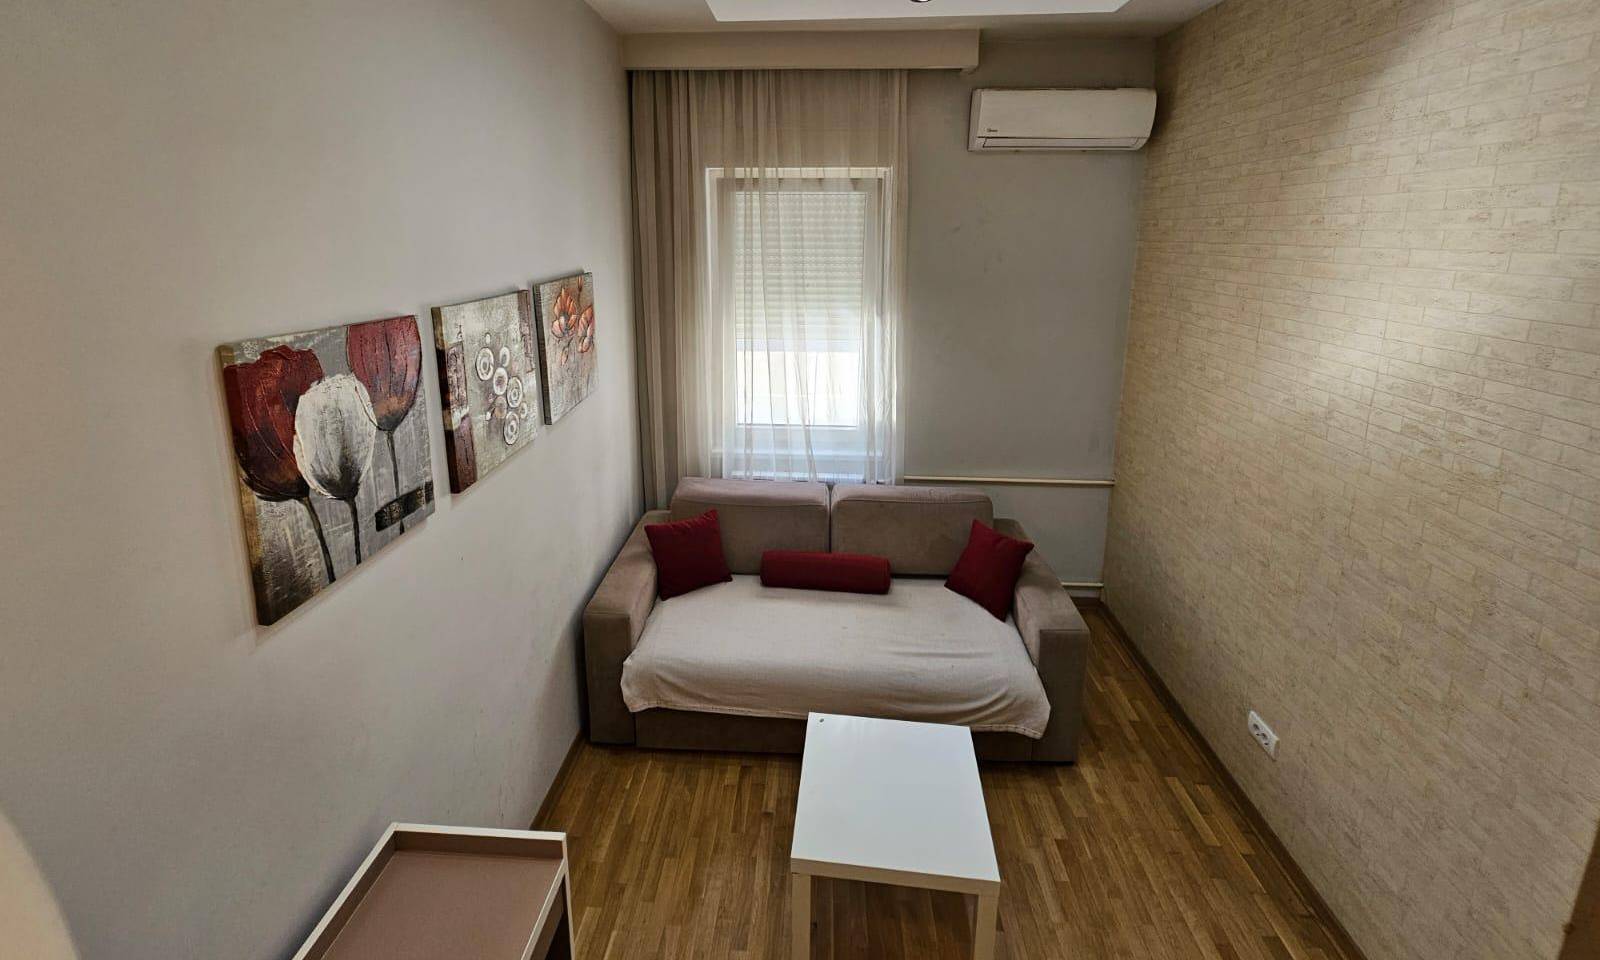 apartman Orion, Novi Beograd, Beograd